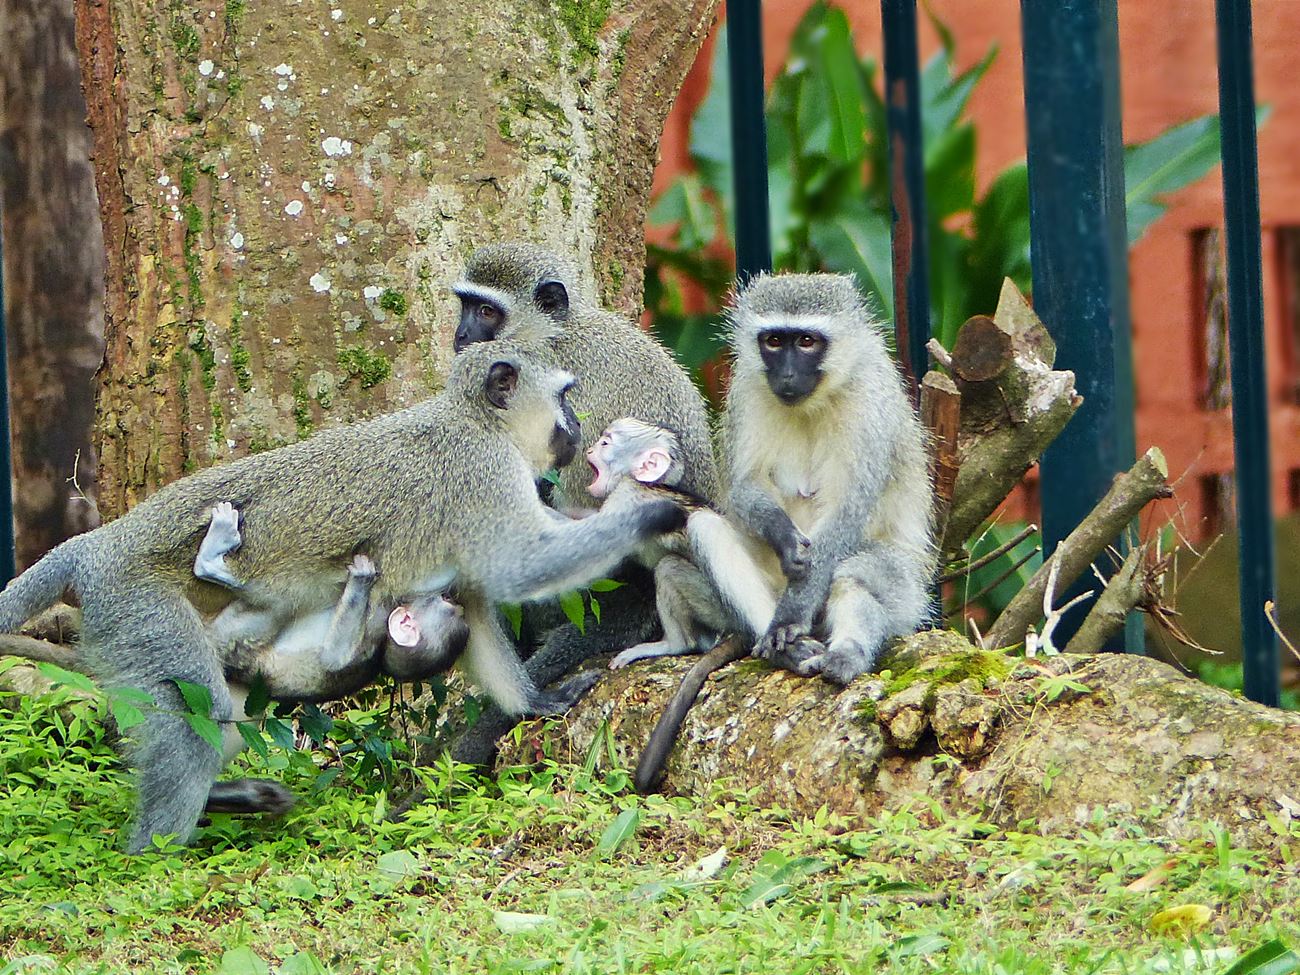 Vervet monkey snatches another monkey's baby